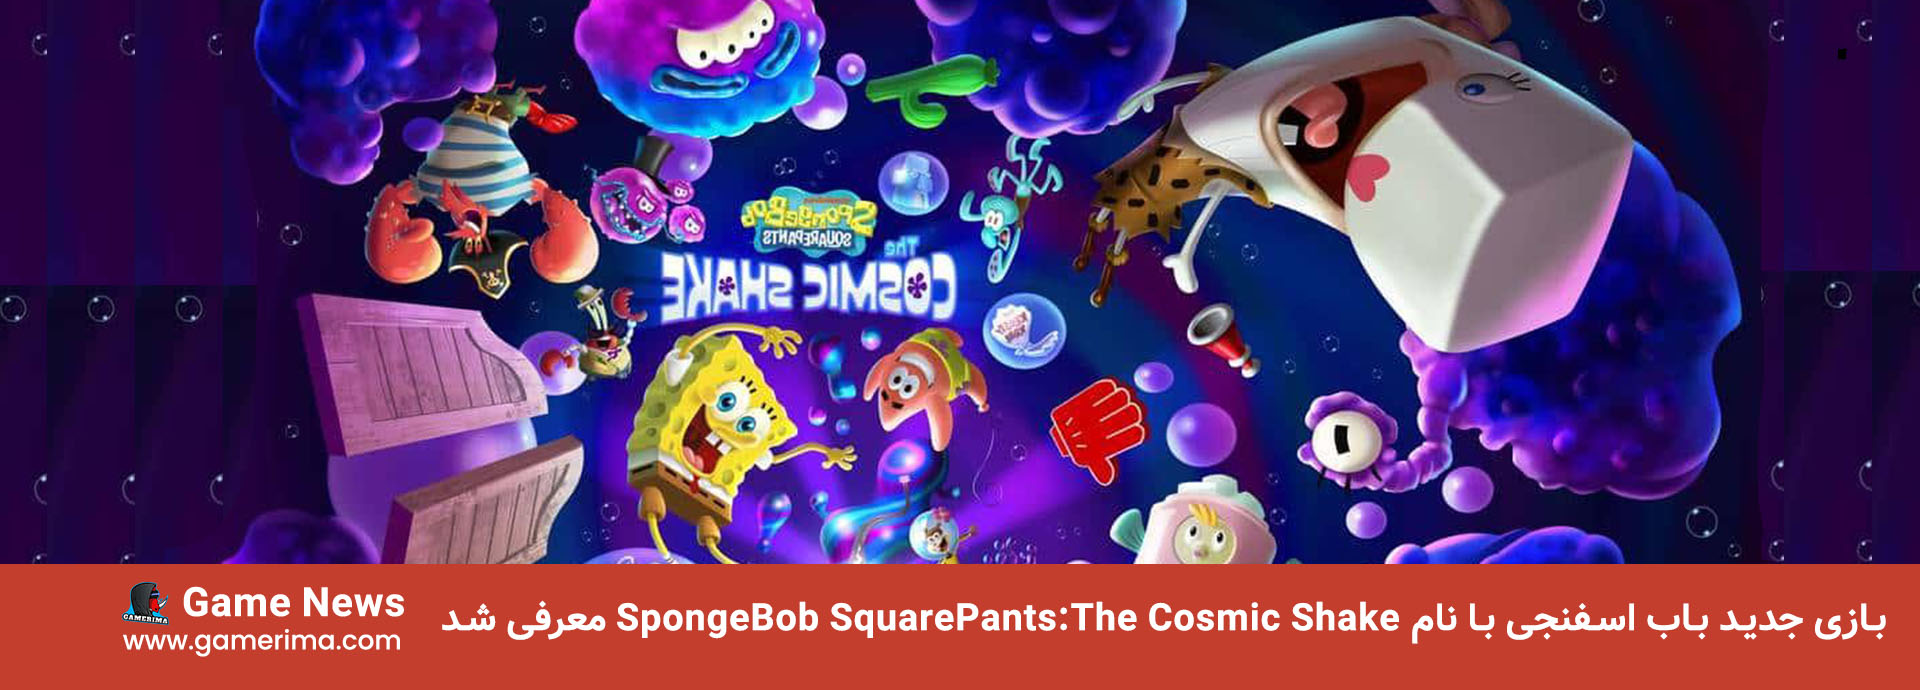 SpongeBob SquarePants The Cosmic Shake Trailer